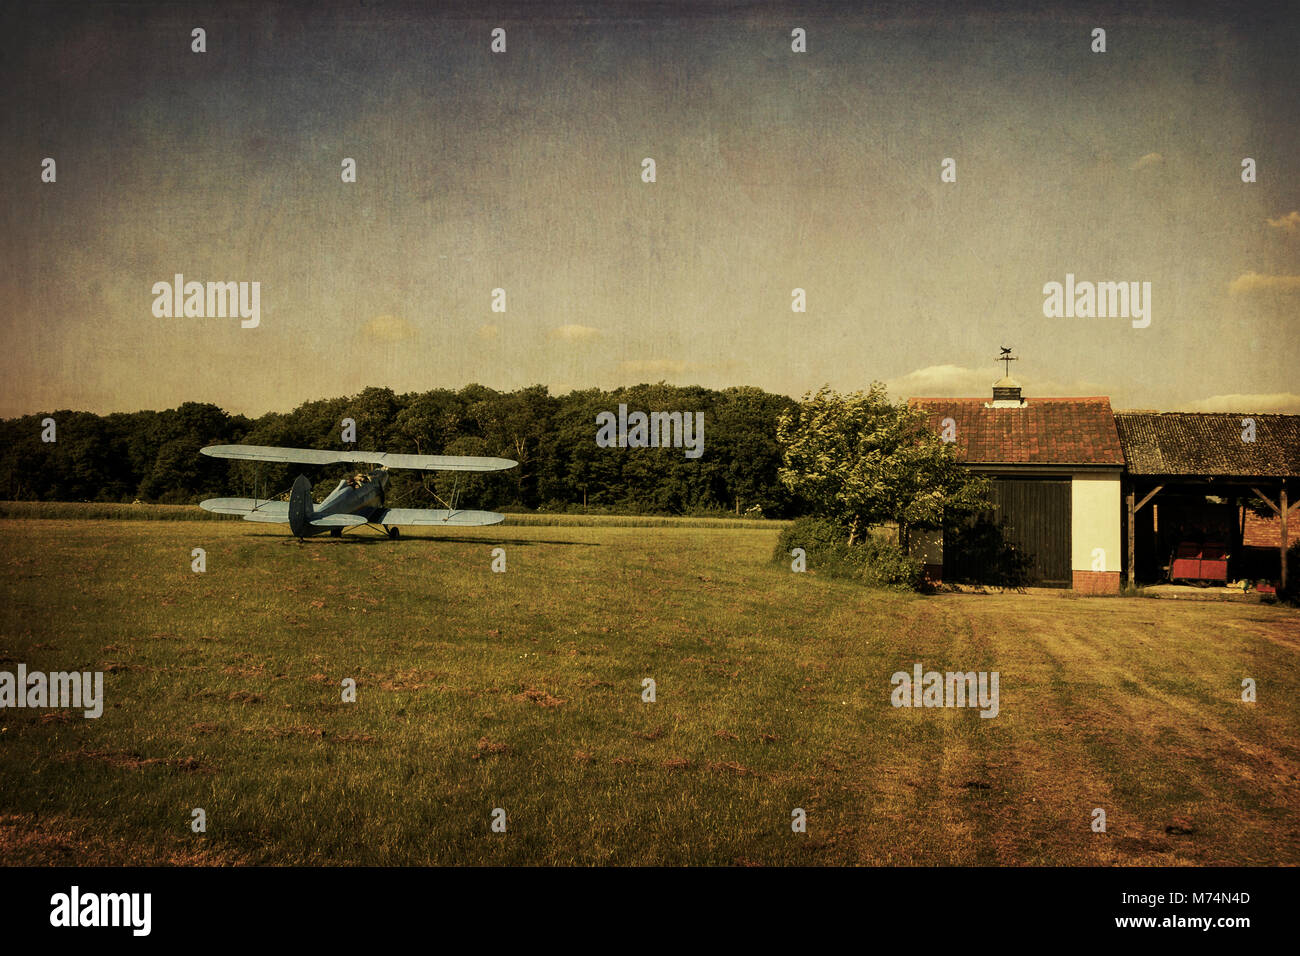 Biplane on a grass airstrip Stock Photo